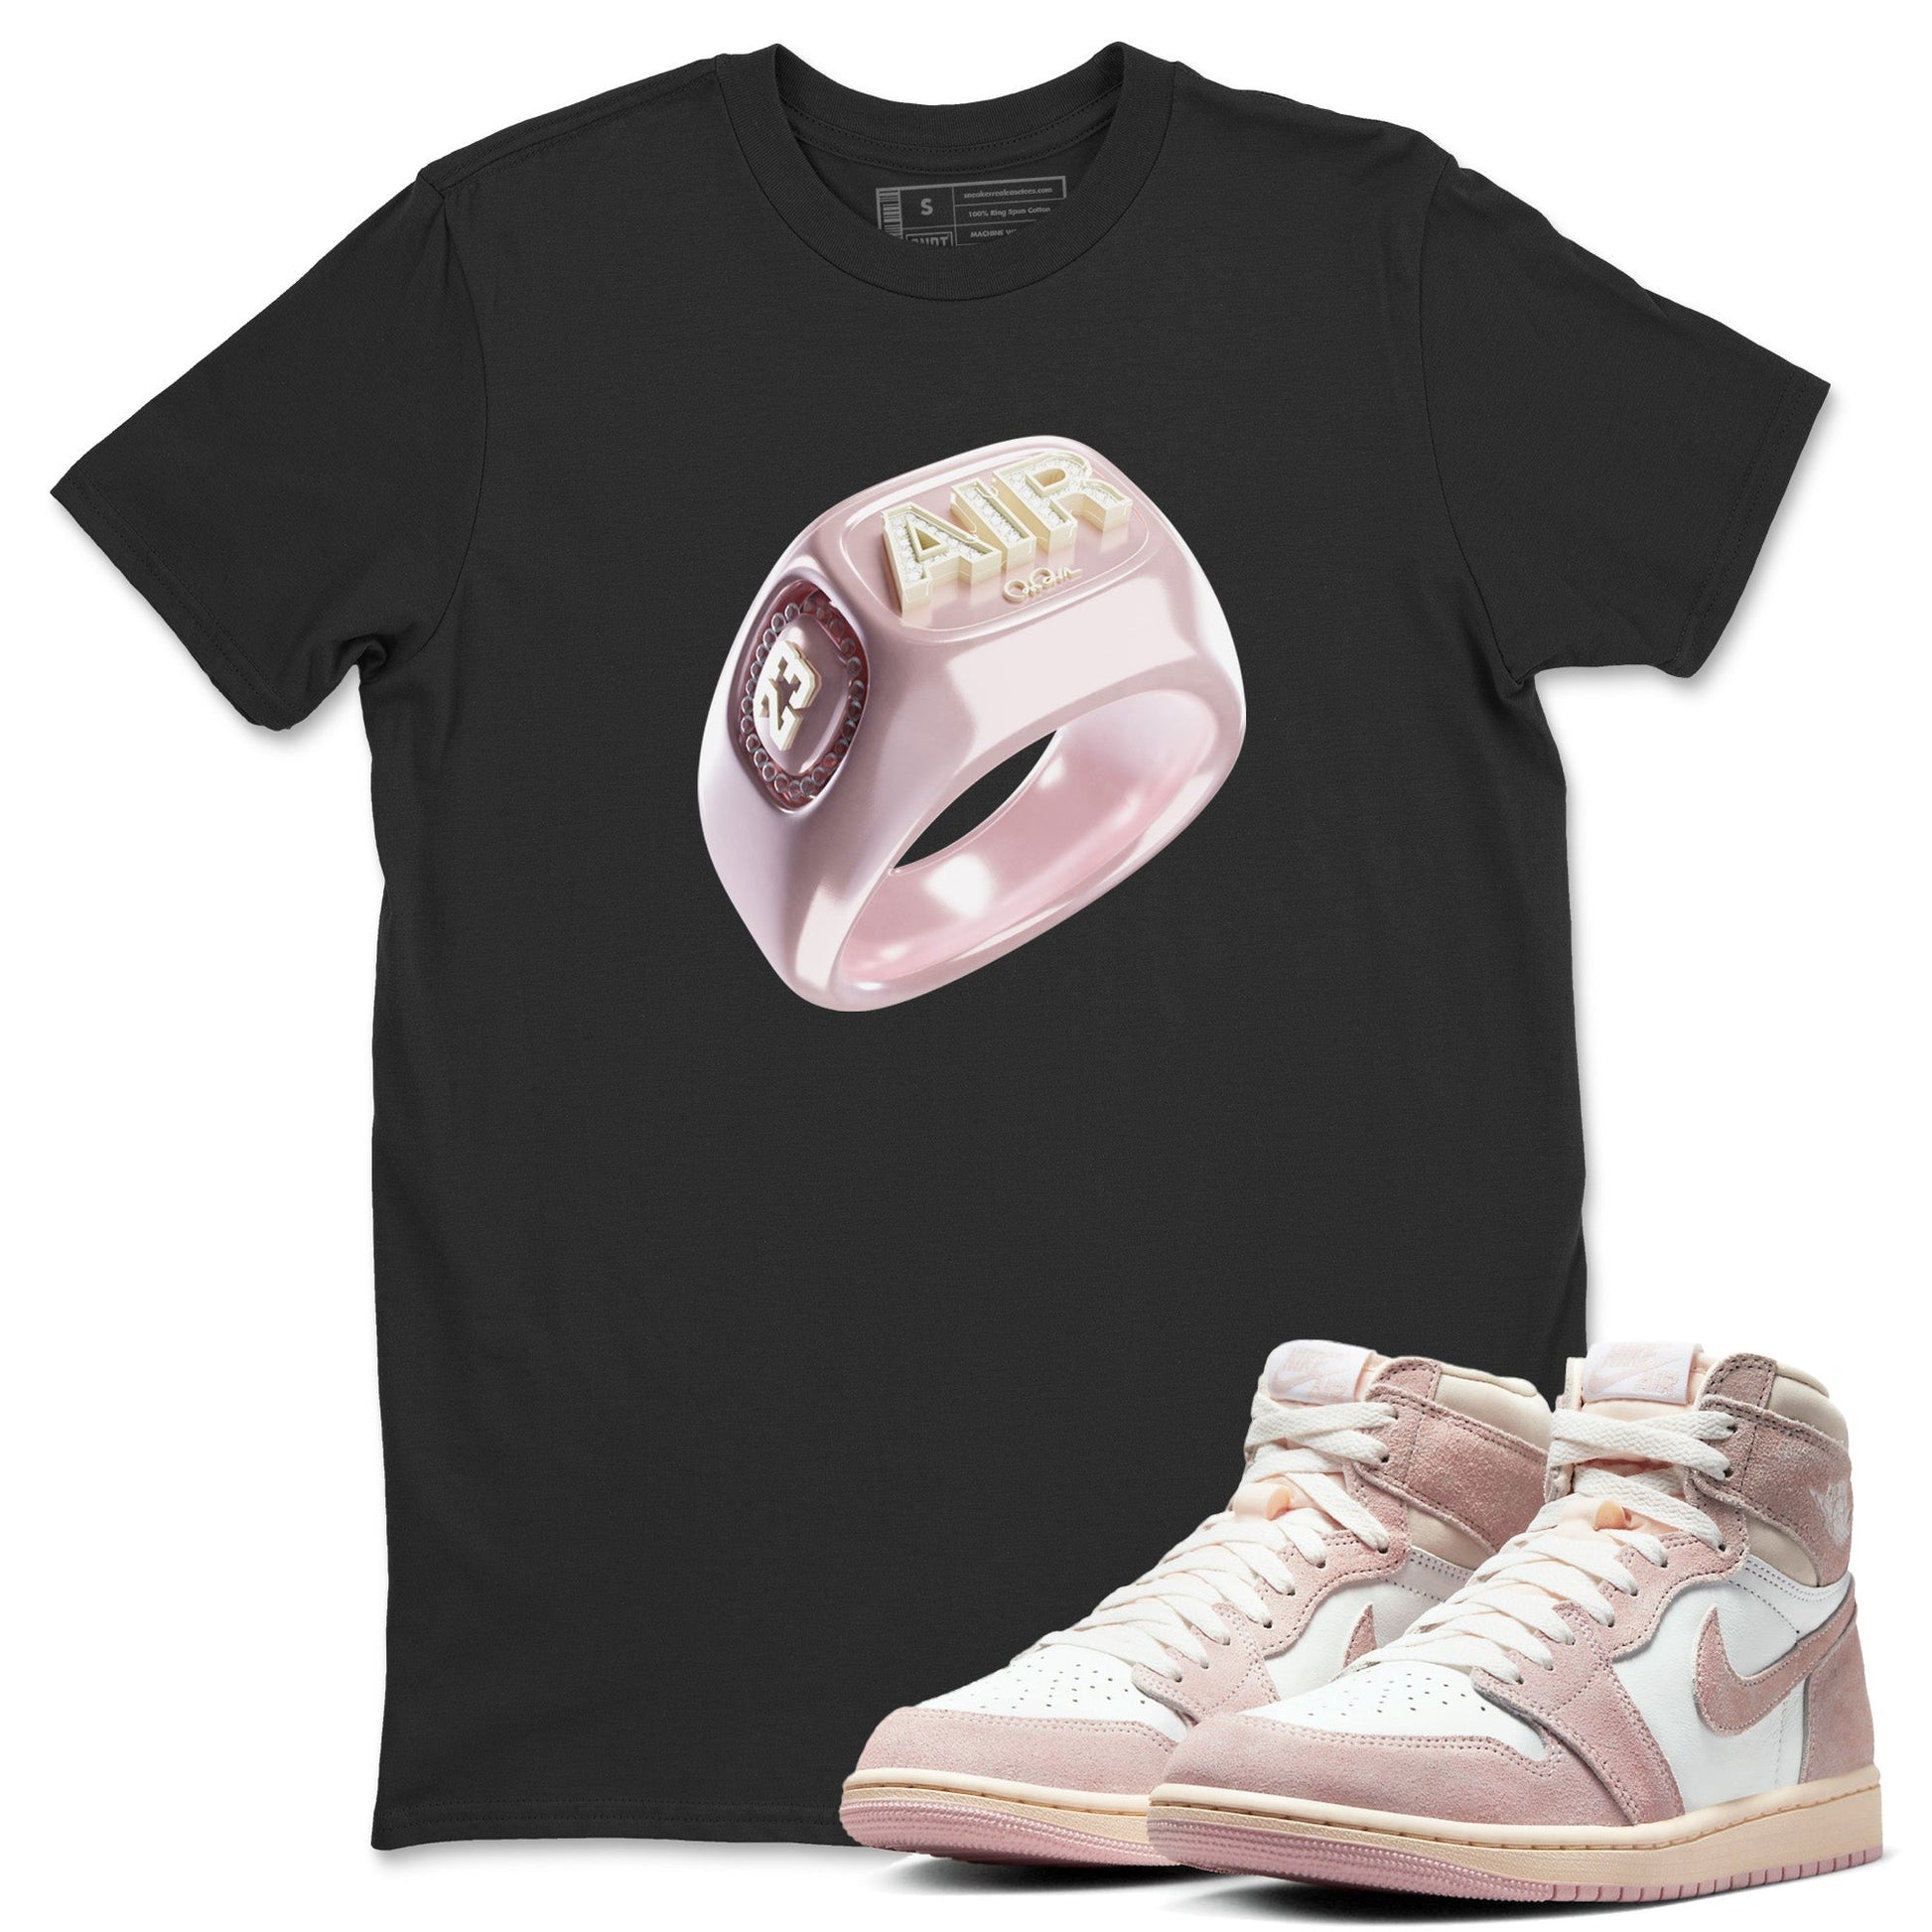 AJ1 Retro High OG Washed Pink Sneaker Tees Drip Gear Zone Diamond Ring Sneaker Tees AJ1 Retro High OG Washed Pink Shirt Unisex Shirts Black 1